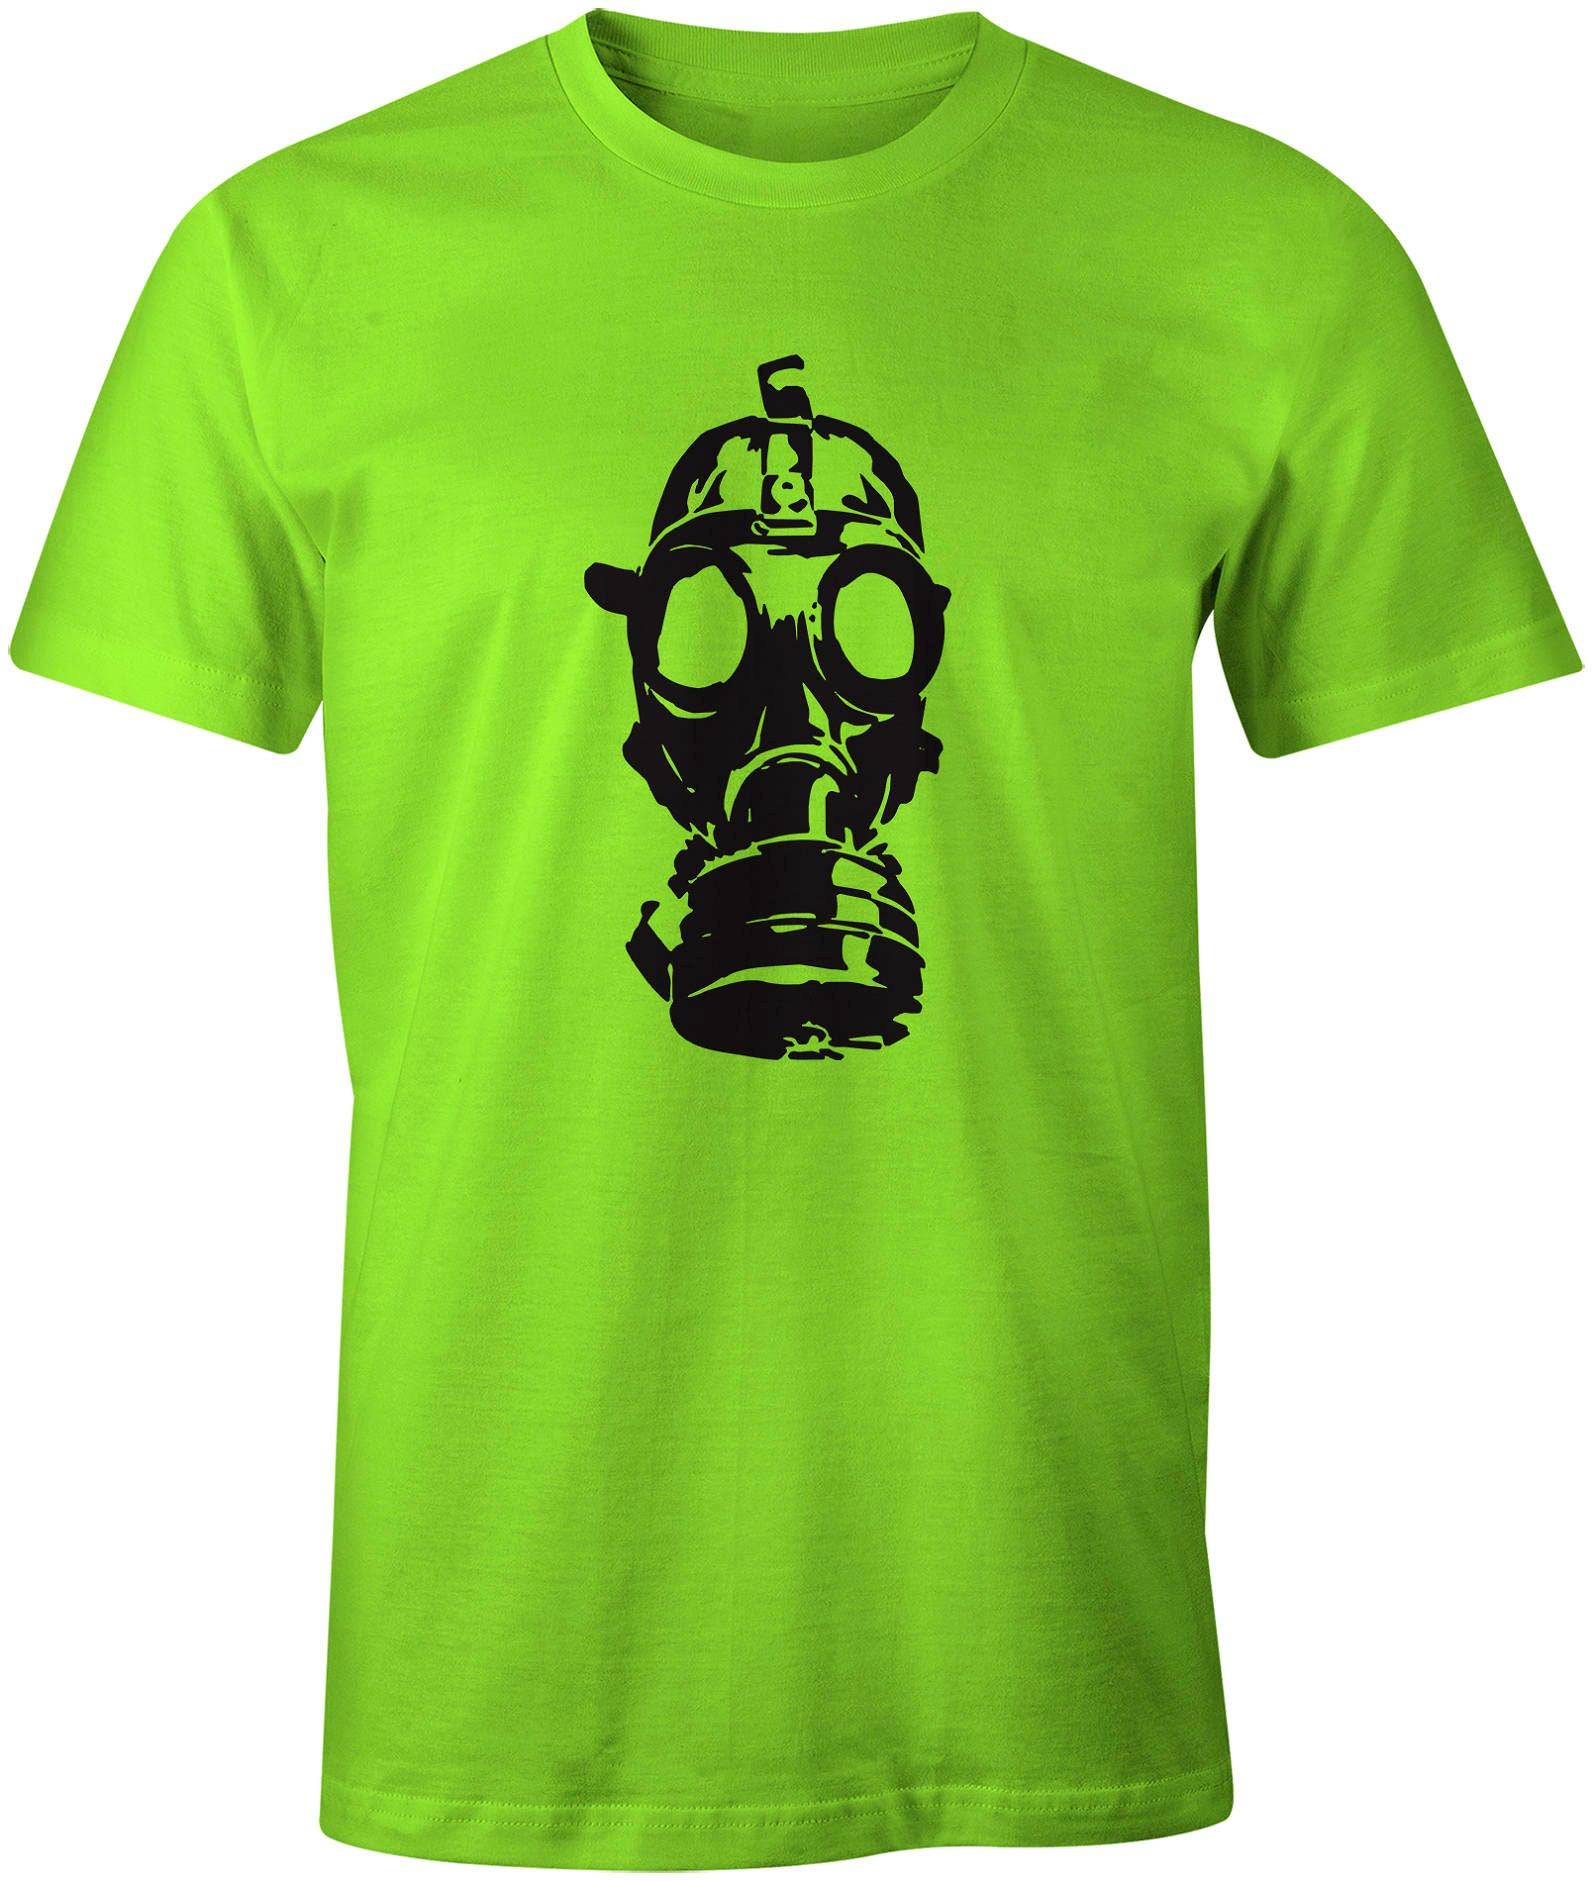 The Gas Mask T-shirt Gas Mask Urban Shirt Fashion War Etsy